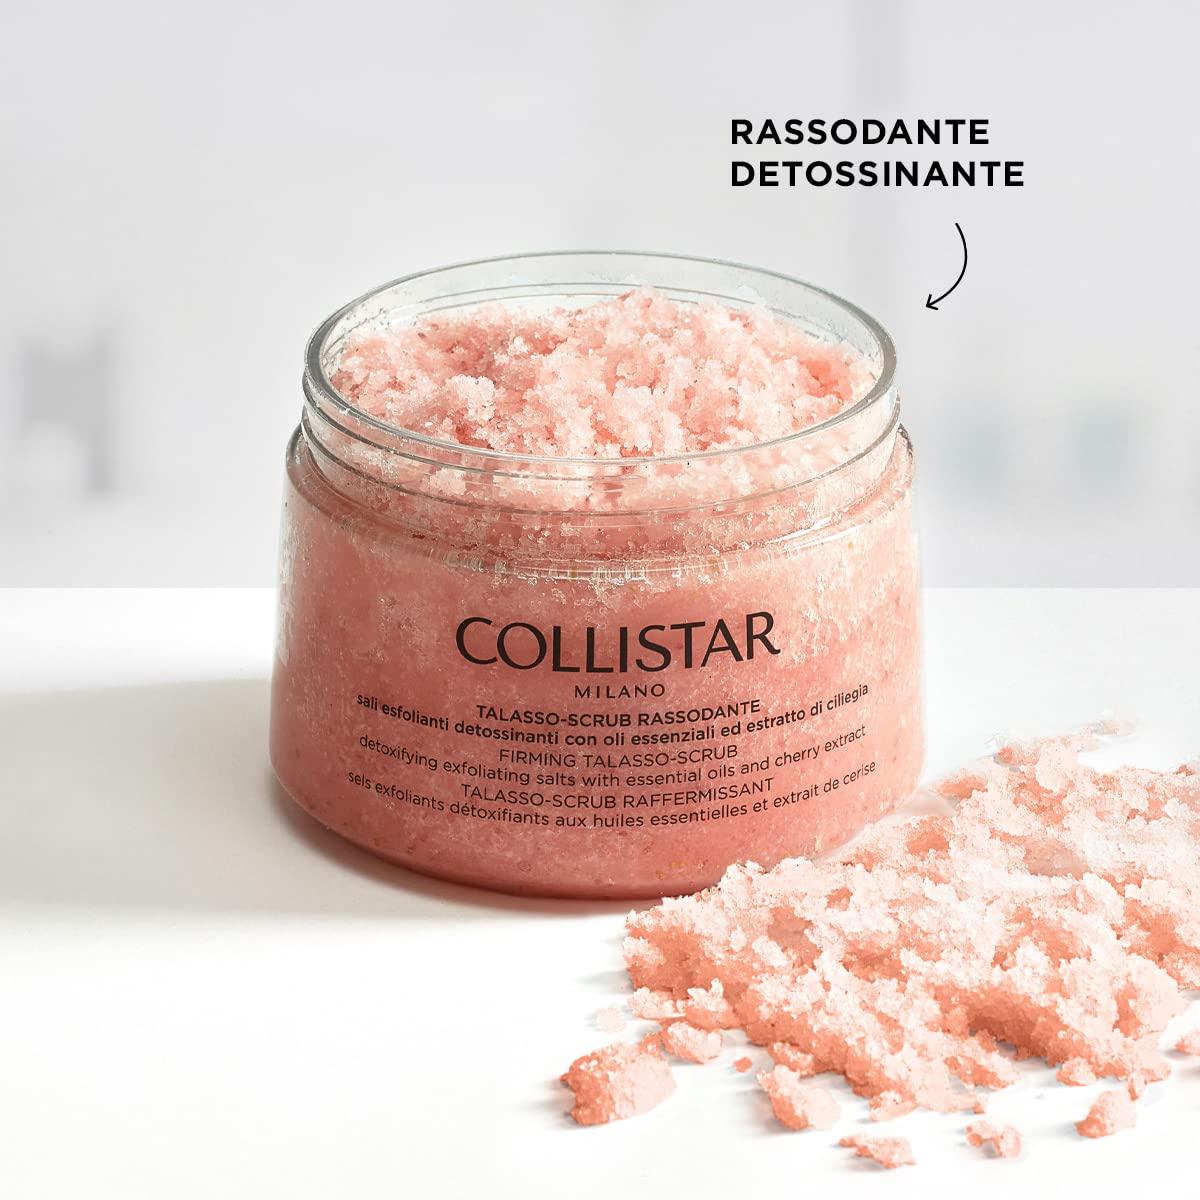 Collistar Firming Talasso Scrub Detoxifying 700g Exfoliating Salts